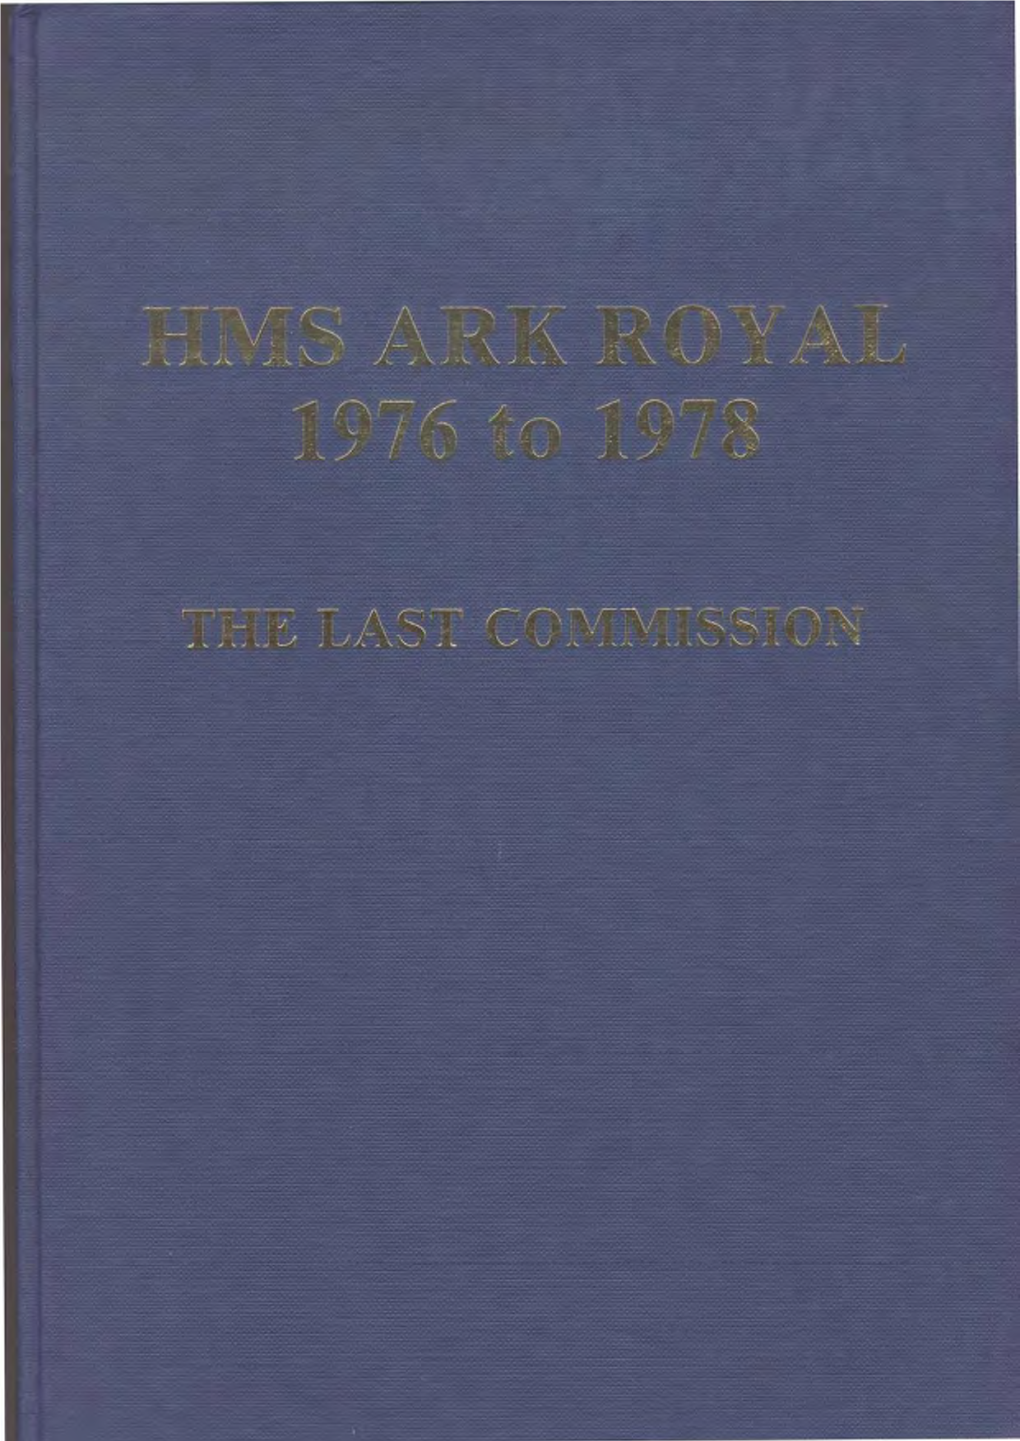 HMS ARK ROYAL, 1976-1978, the Last Commission